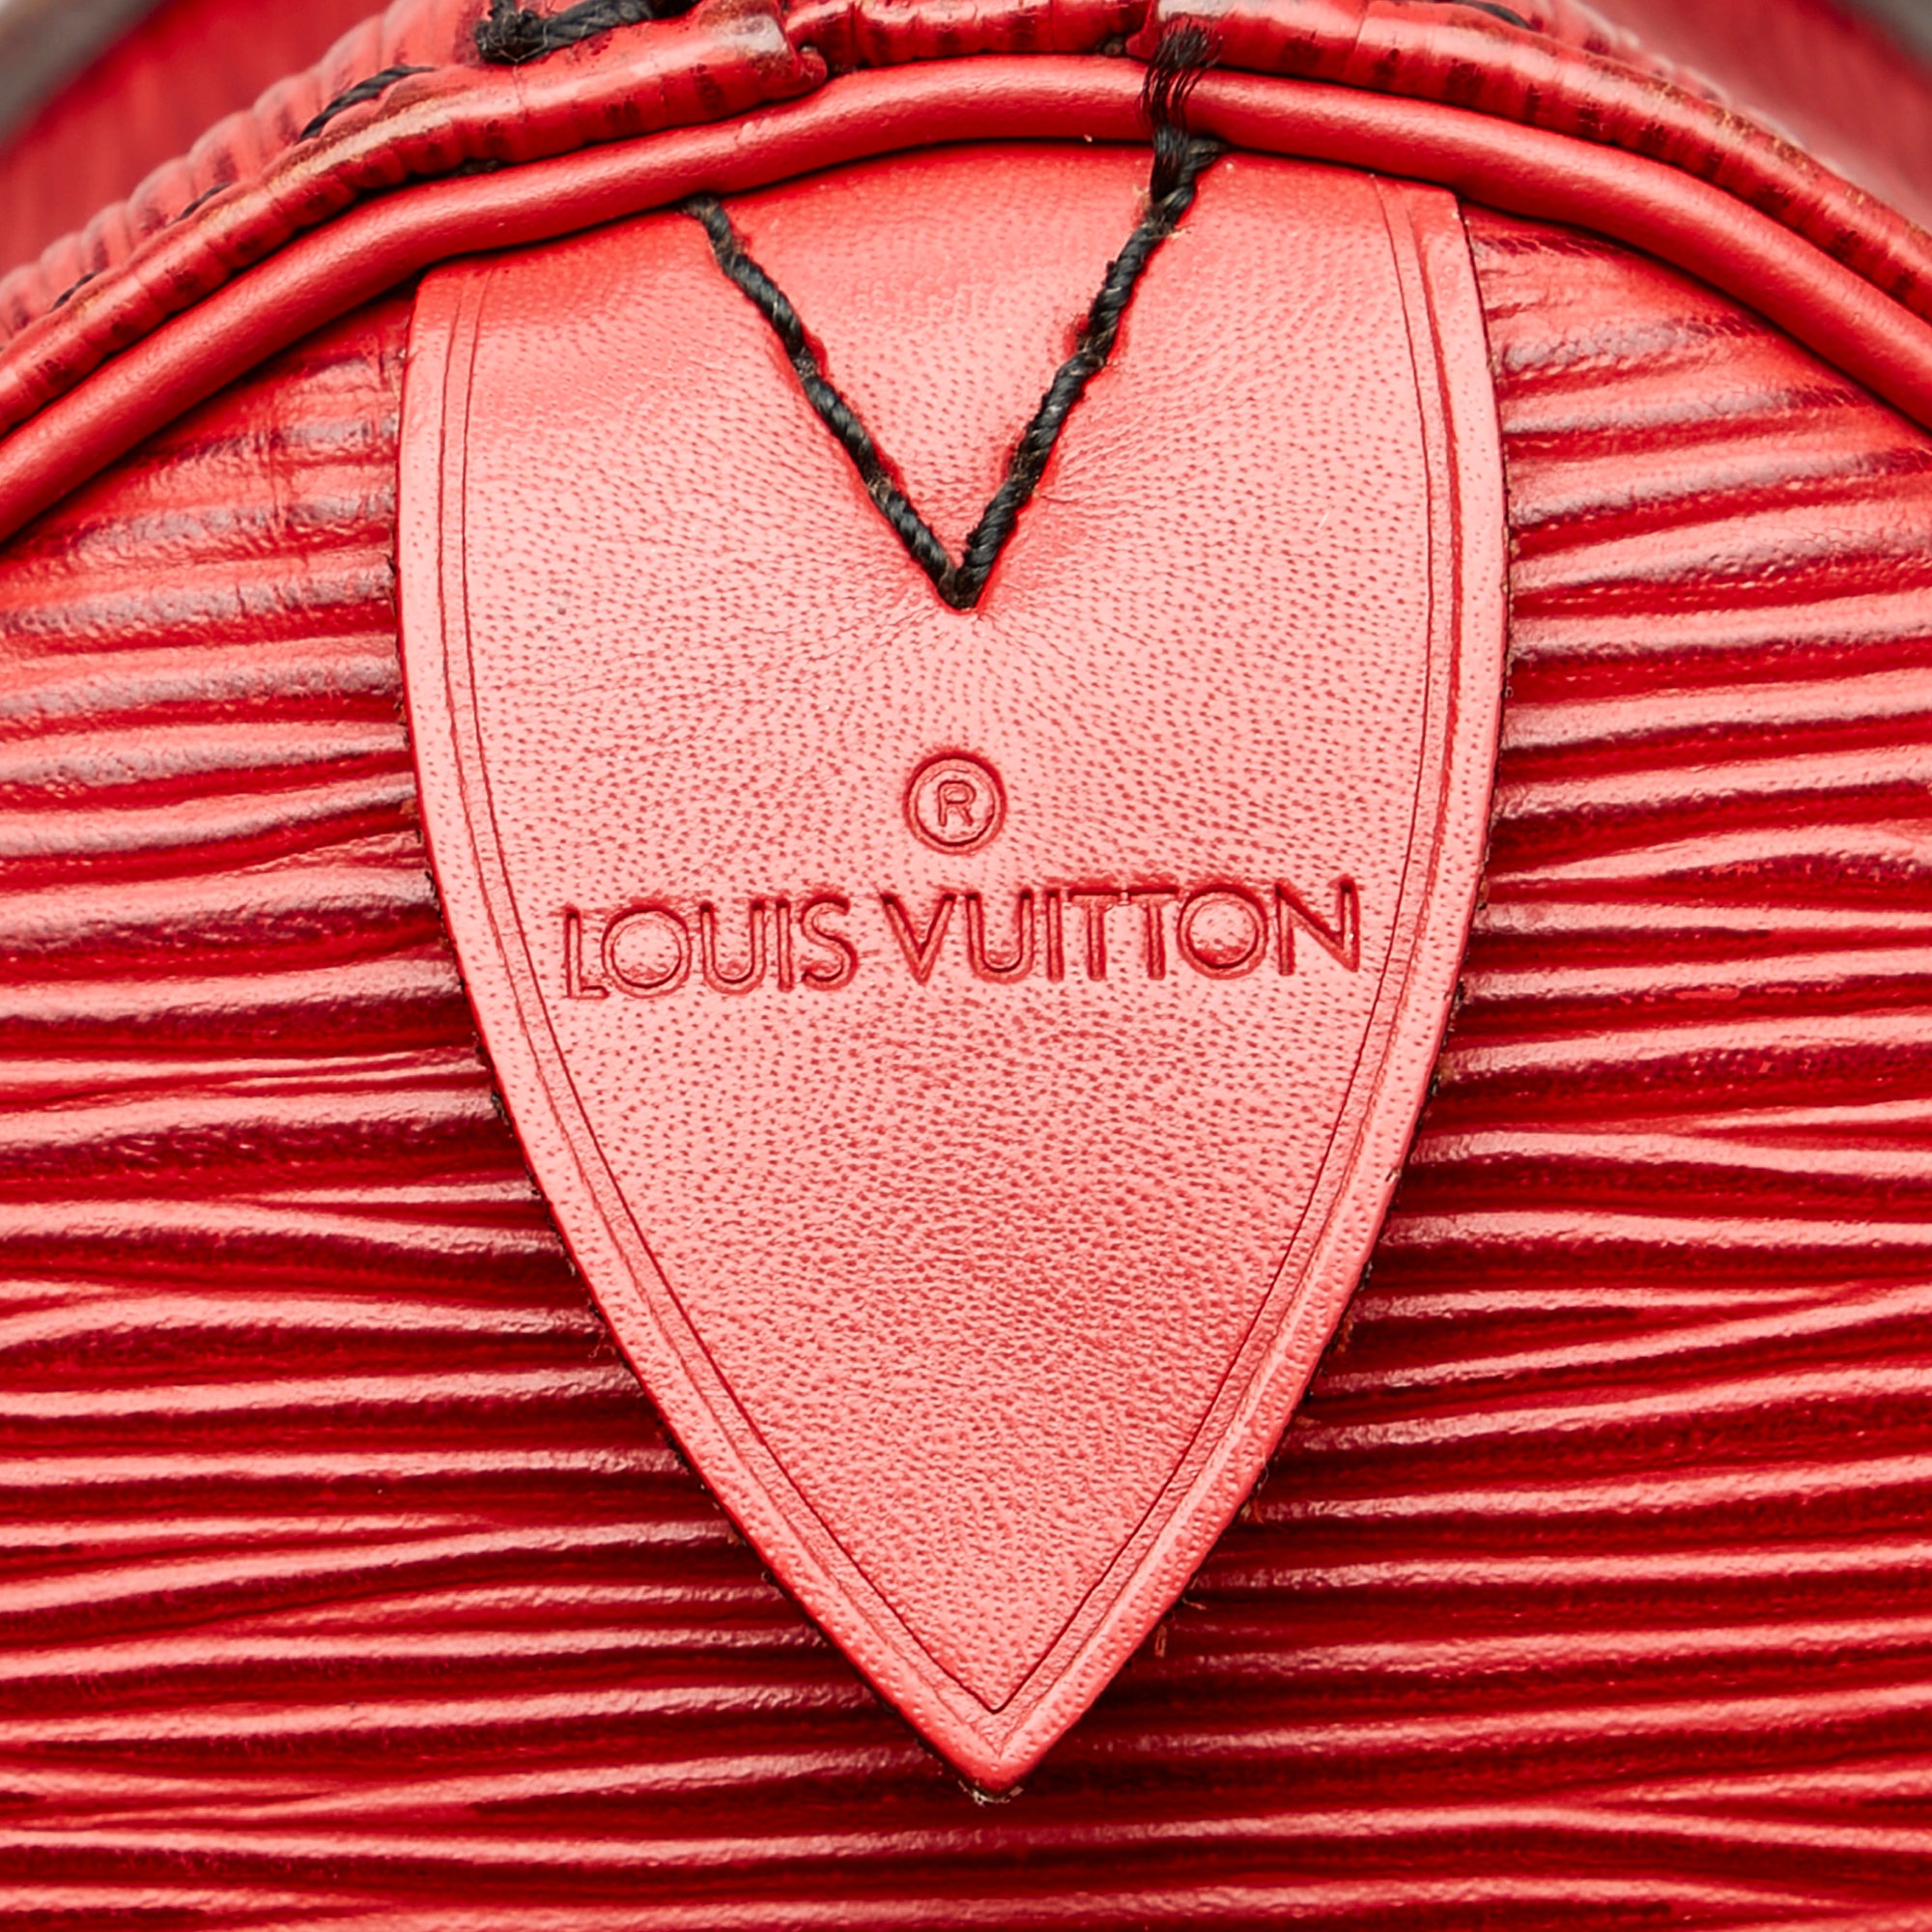 Louis Vuitton Epi Speedy 35 - Red Luggage and Travel, Handbags